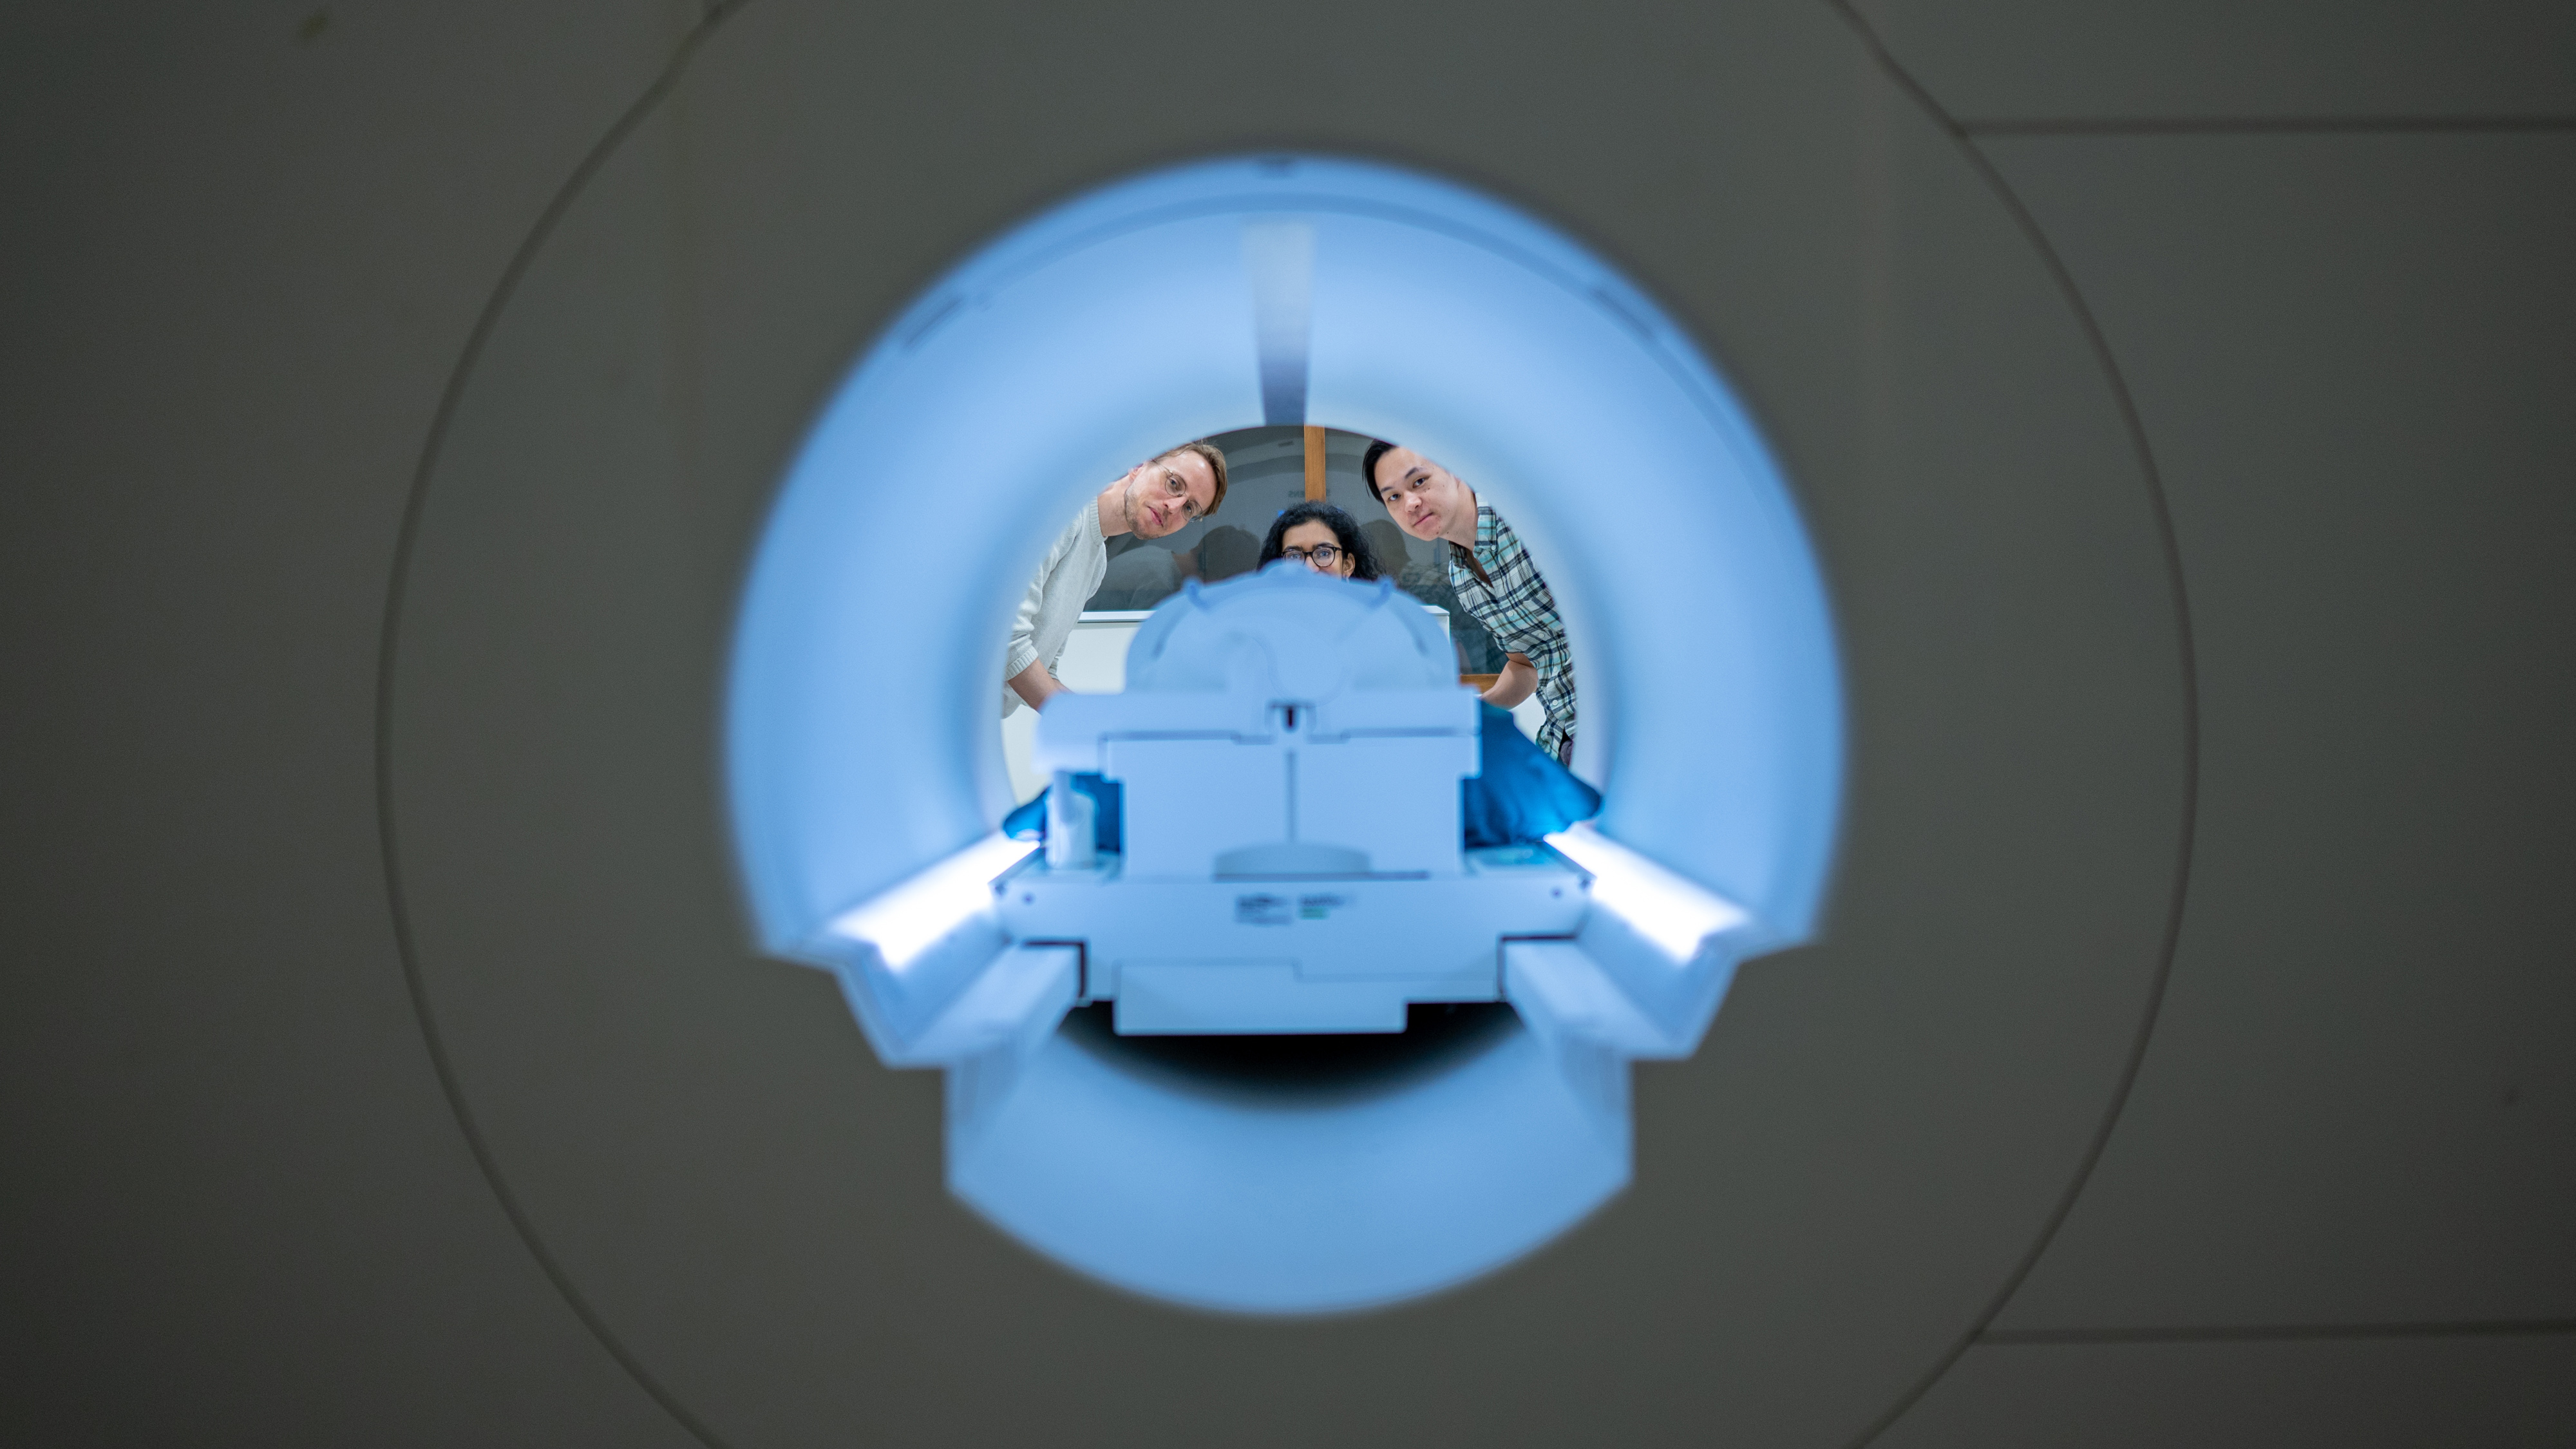 Three researchers peer inside an MRI machine